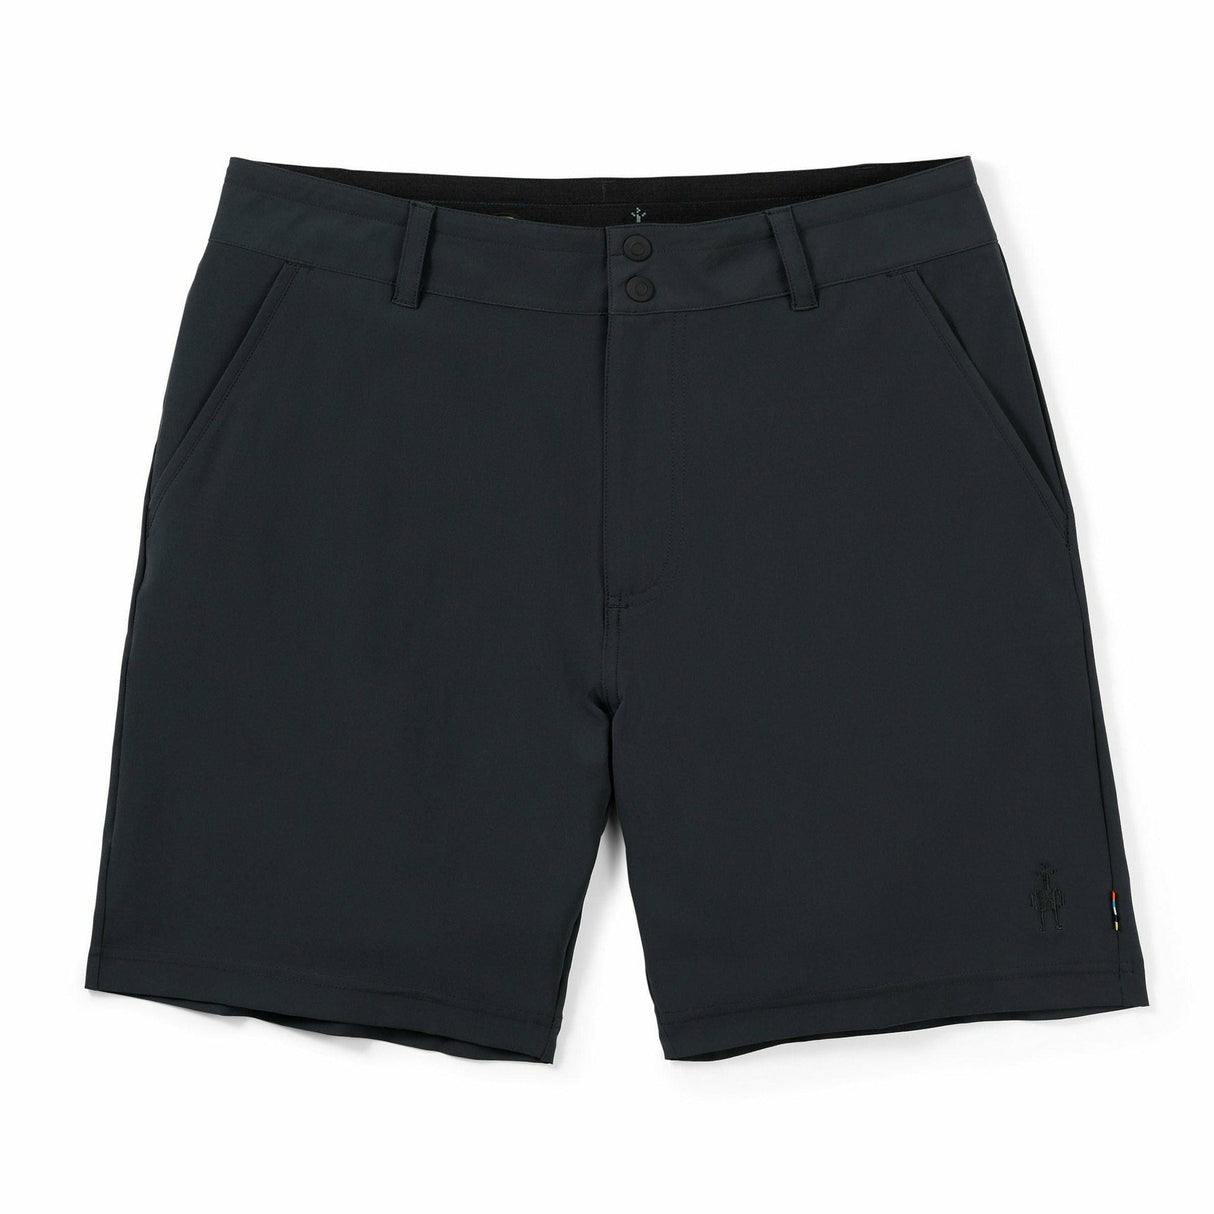 Smartwool Mens Merino Sport 8" Shorts  -  Large / Black